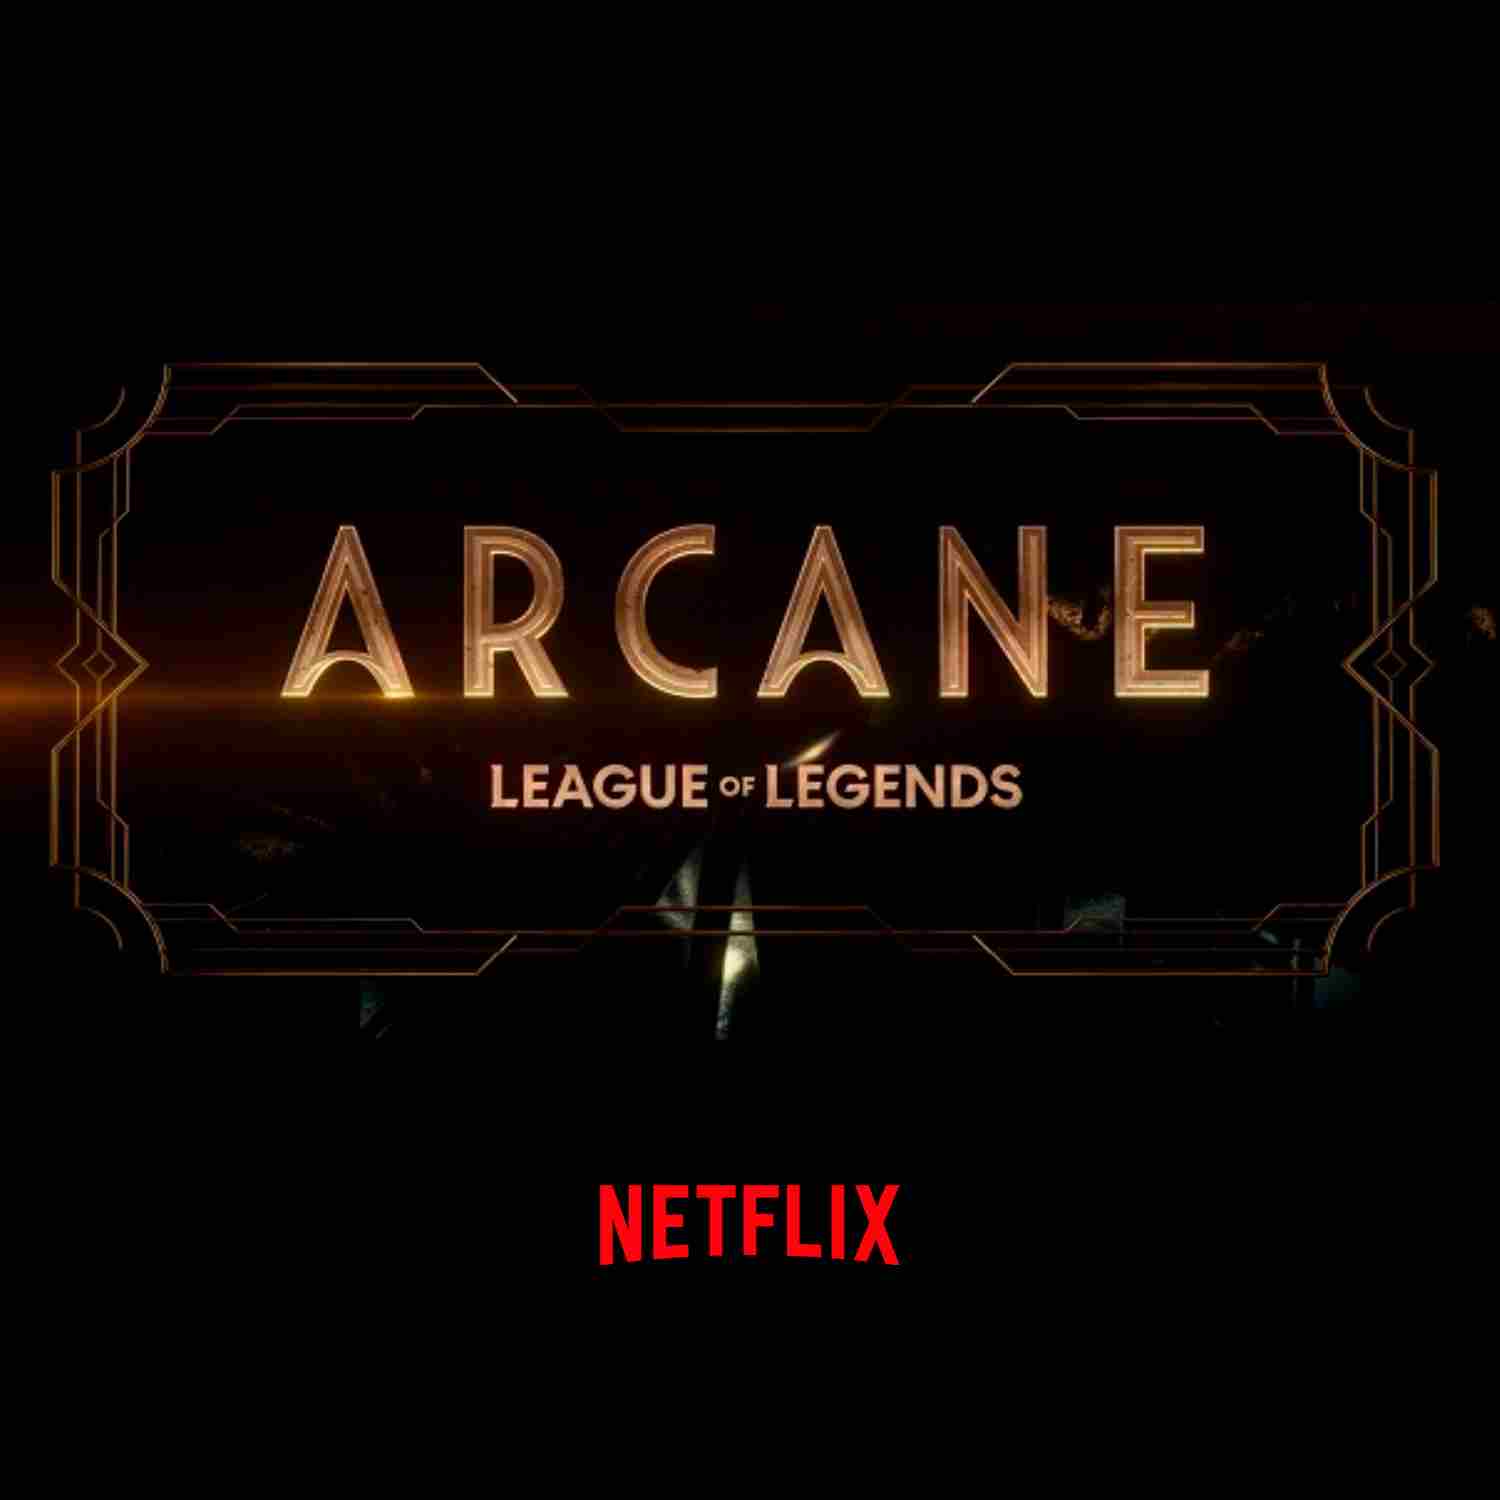 Serie de League of Legends llega a Netflix en noviembre